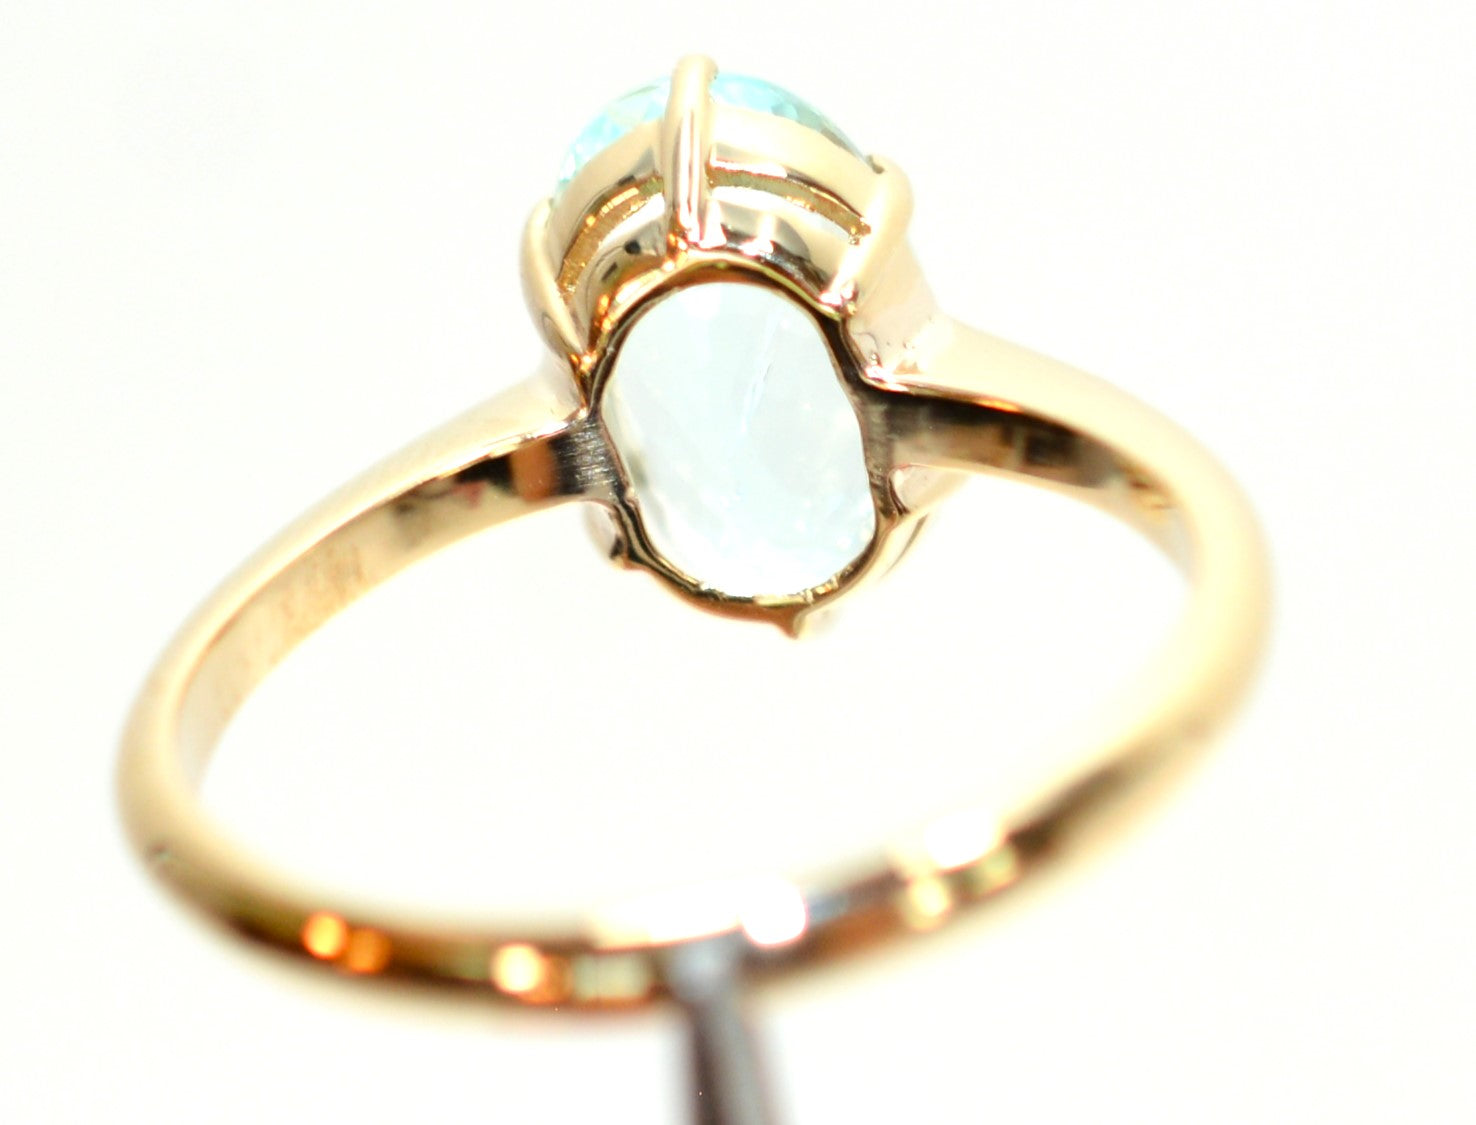 Certified Natural Paraiba Tourmaline Ring 14K Gold 1.91ct Solitaire Birthstone Statement Cocktail Ring Gemstone Engagement Ring Bridal Blue